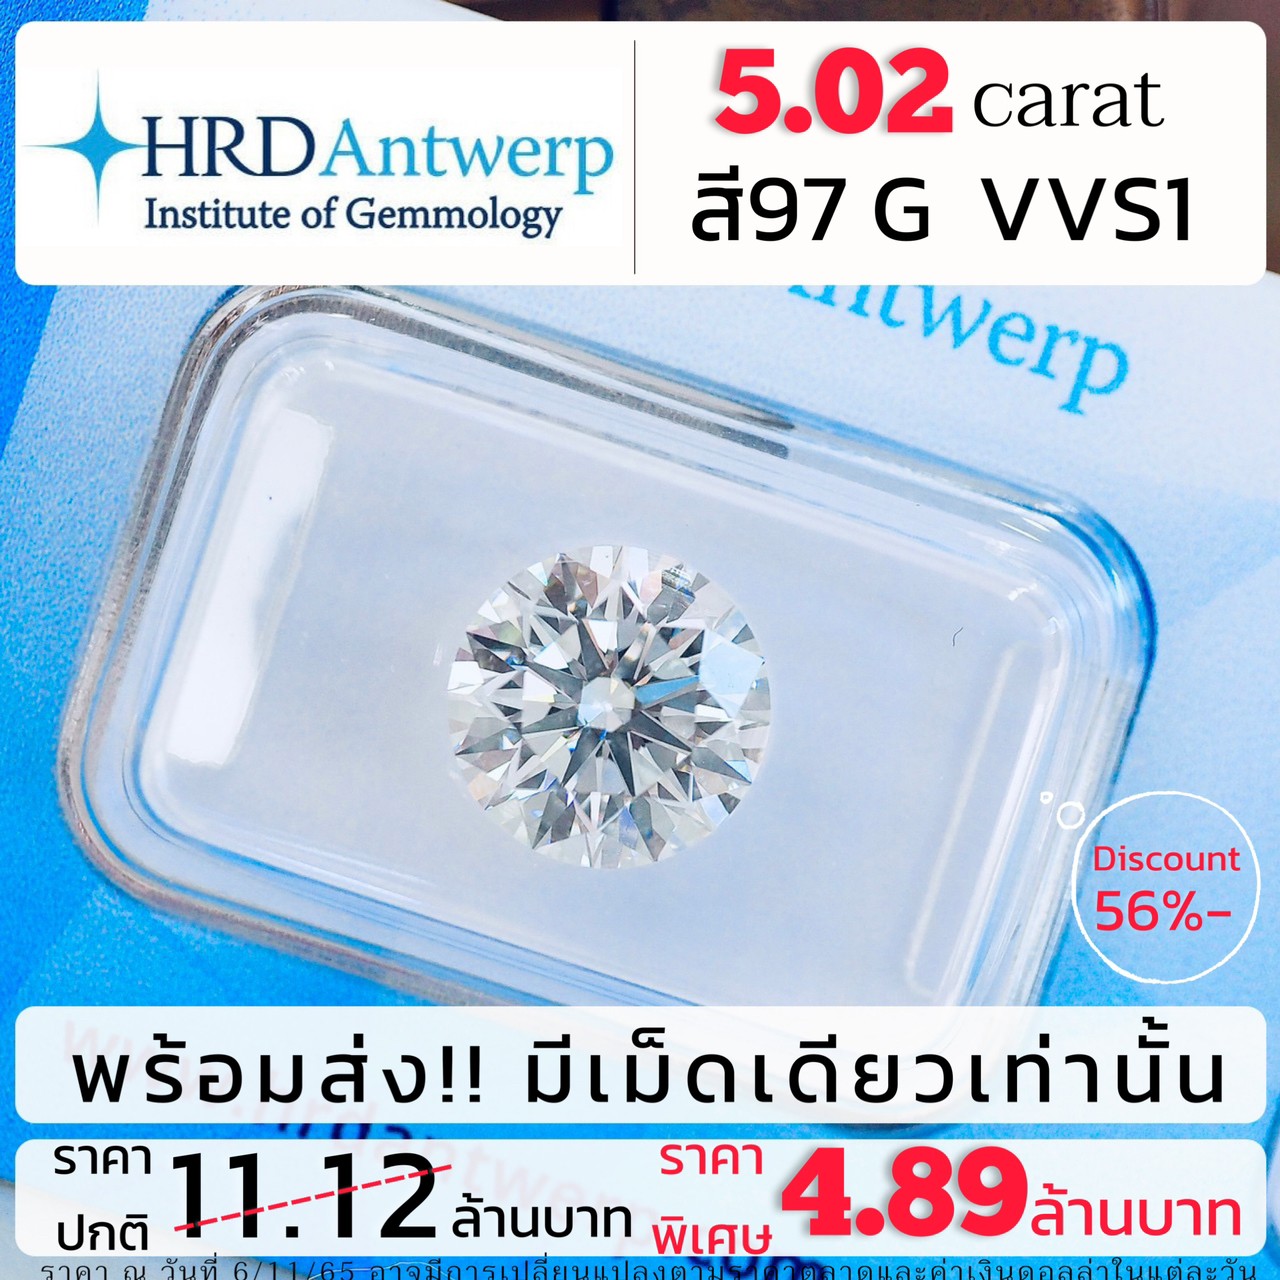 [27153] Diamond size 5.02 carats, HRD certificate Discount 4,890,000